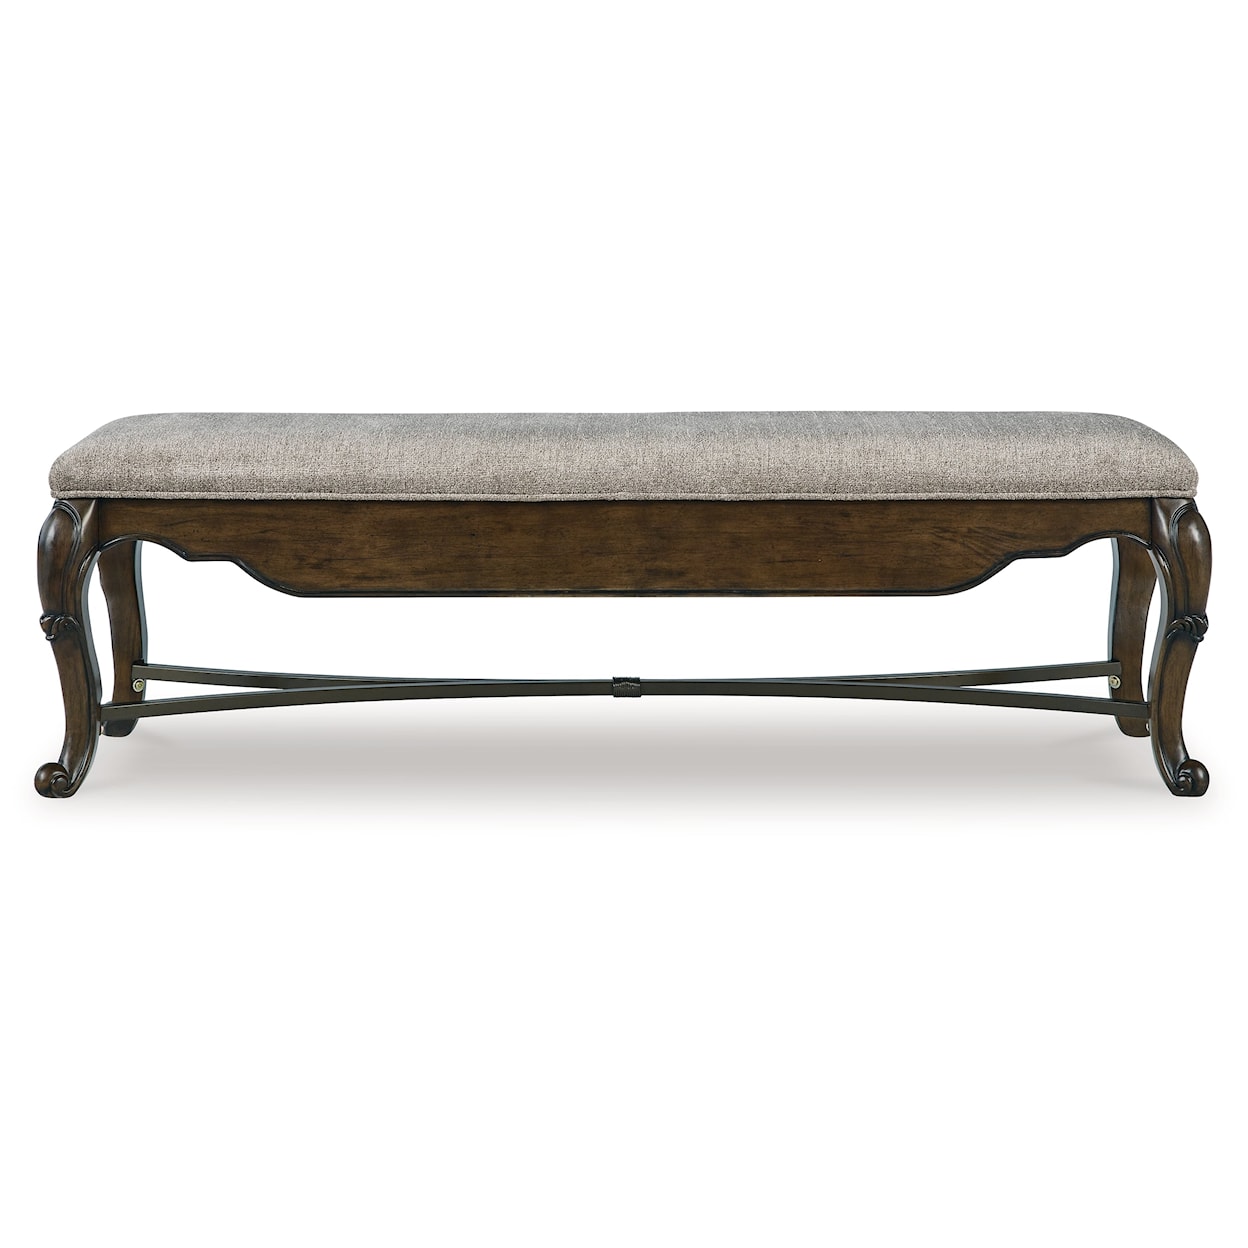 Ashley Furniture Signature Design Maylee Upholstered Storage Bench